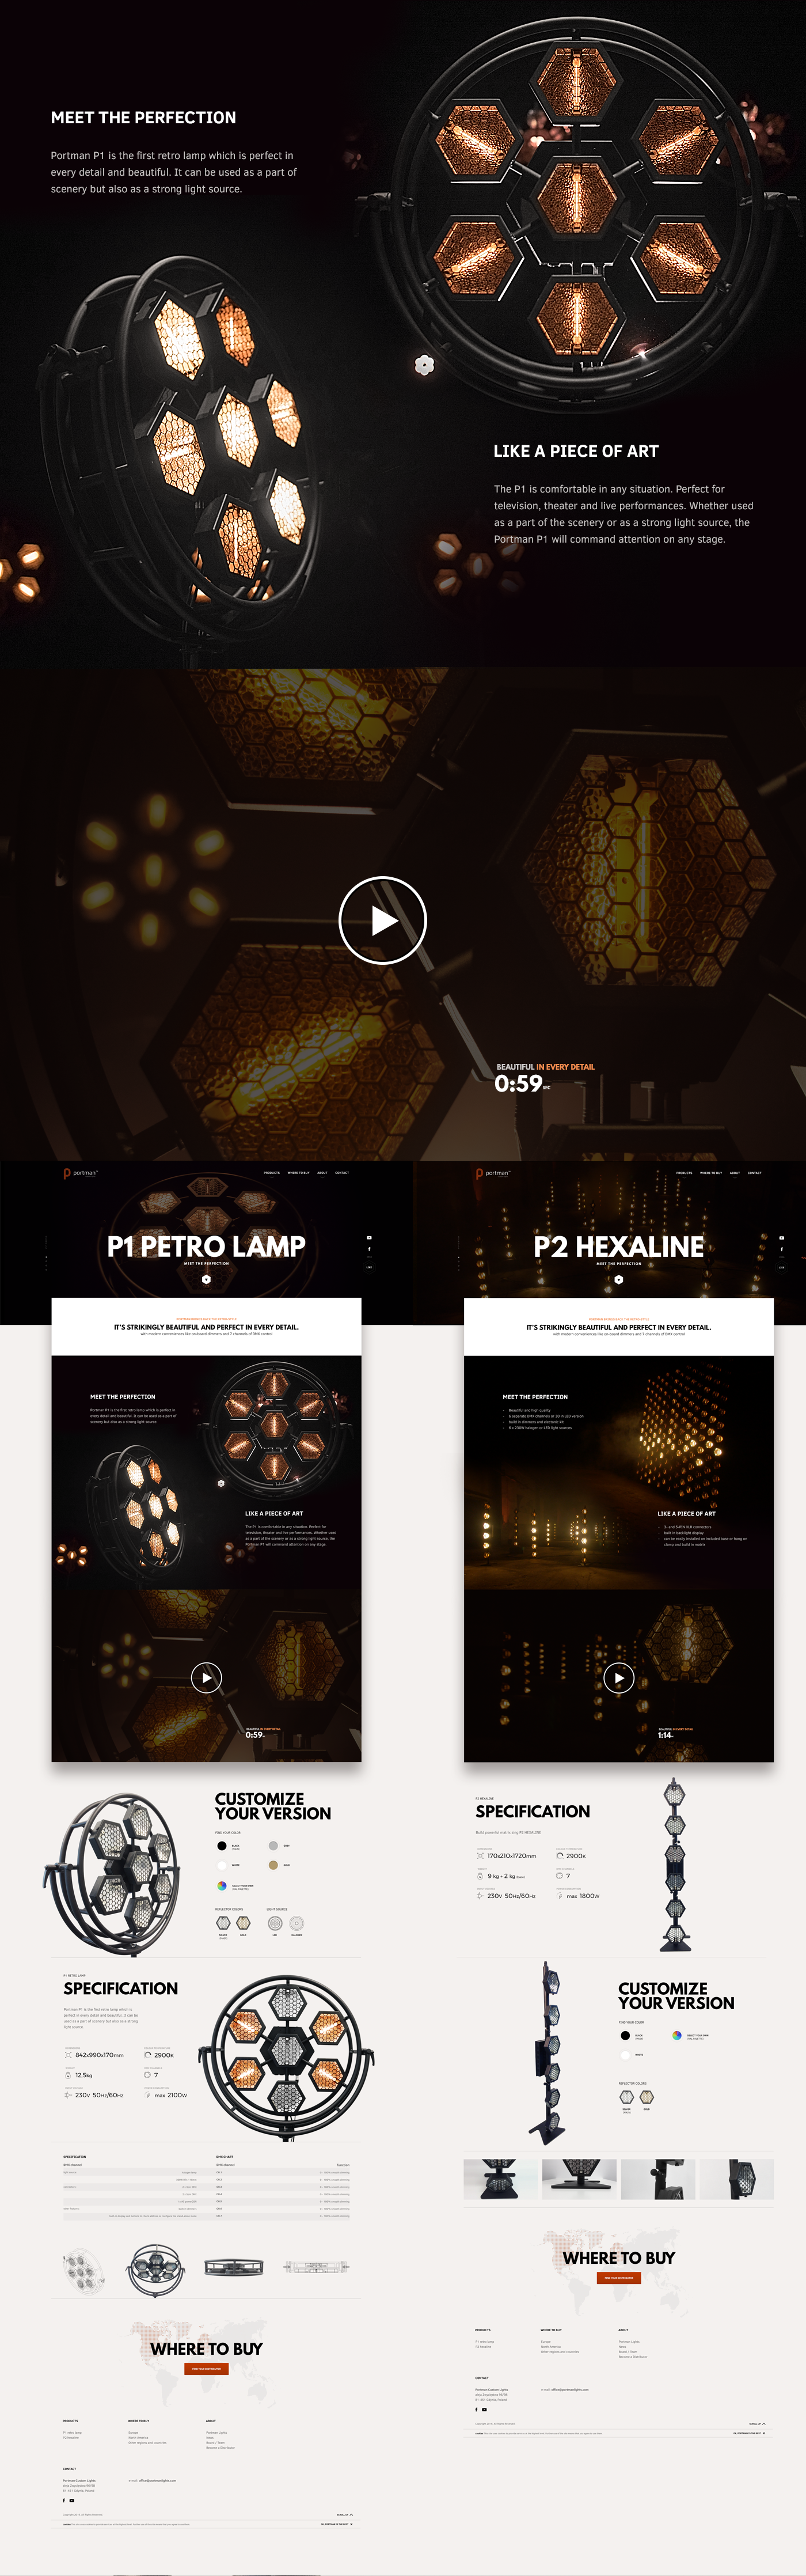 portman lights design voila bcwikalowski hexaline p1 petro lamp